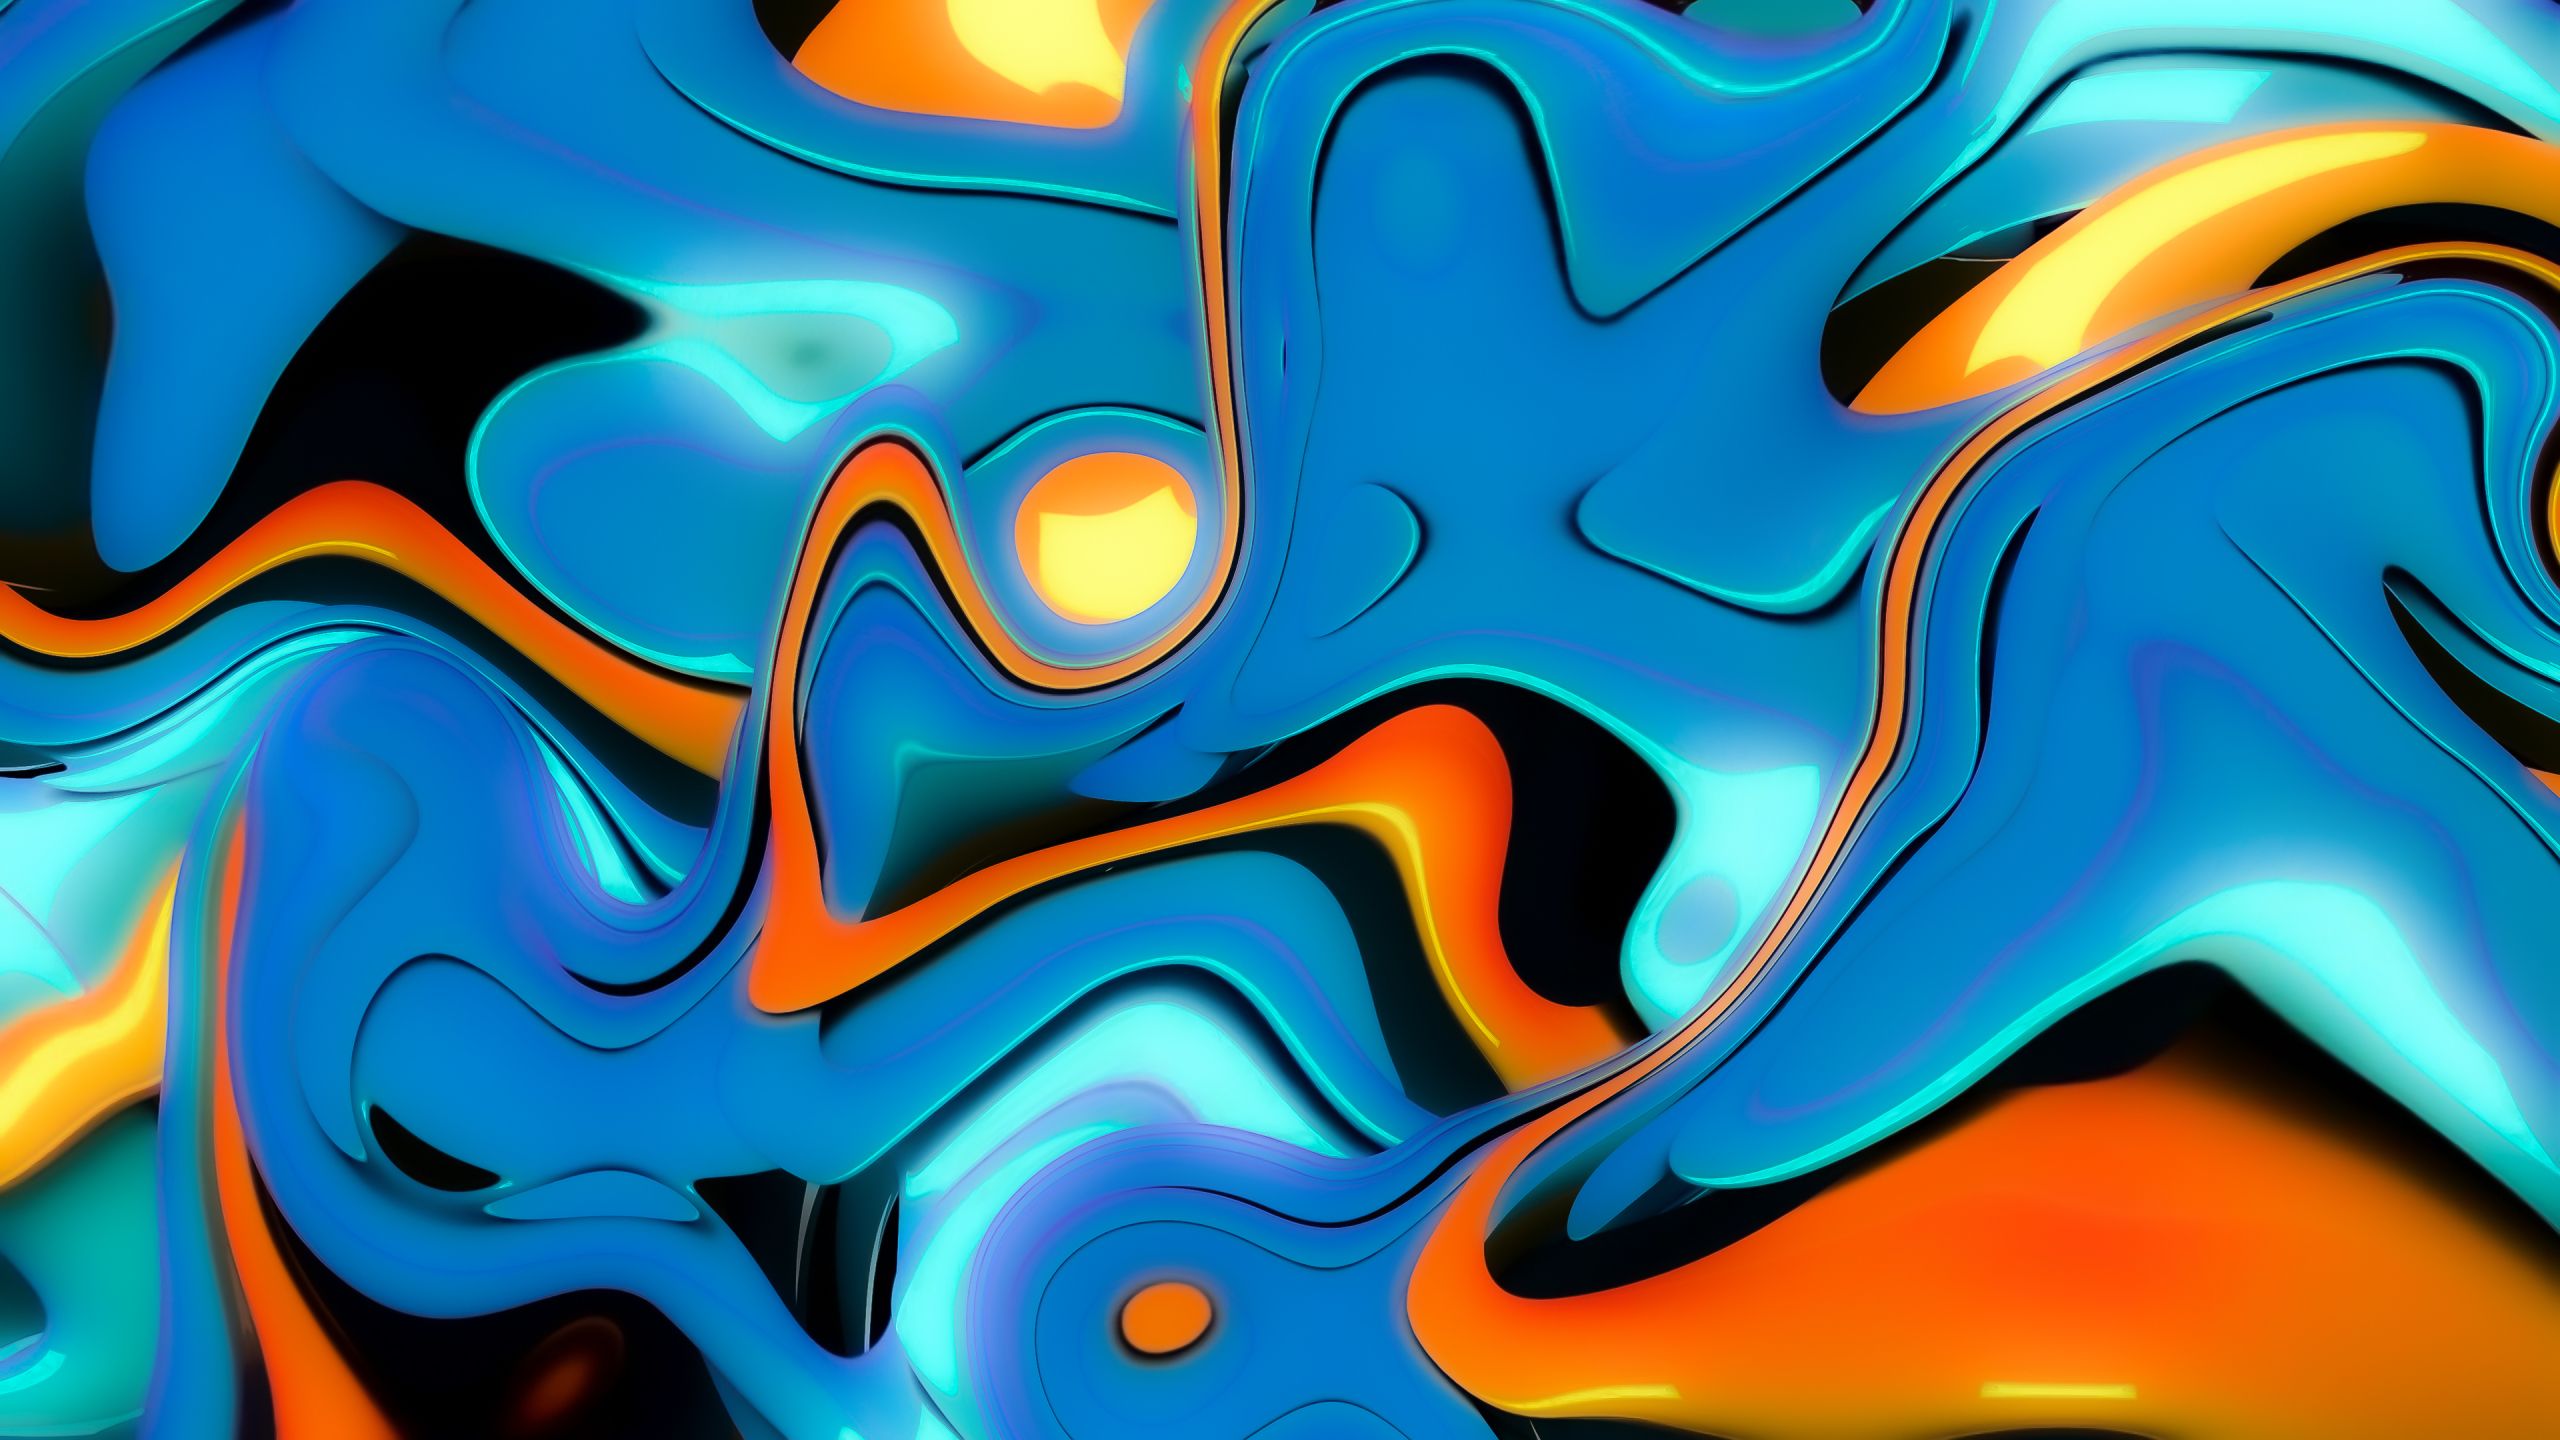 Swirl Splash 4K 1440P Resolution Wallpaper, HD Abstract